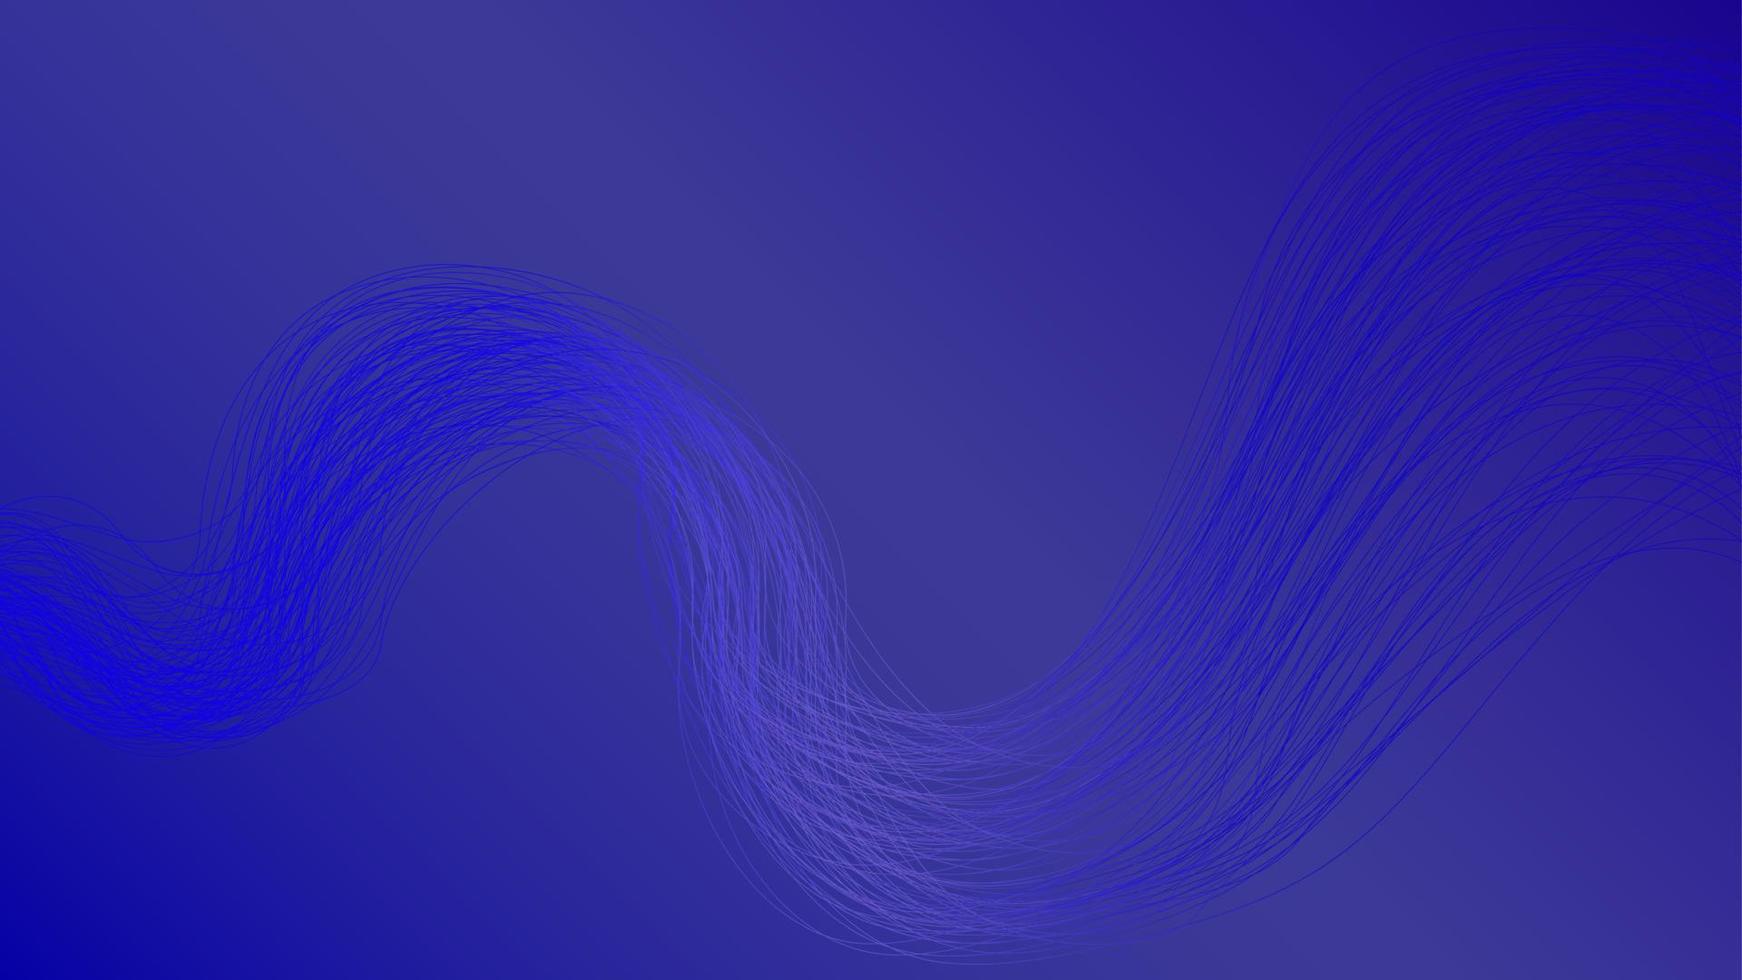 Vektor-Illustration des Blaus der Linien abstrakten Hintergrund. Folge10. vektor